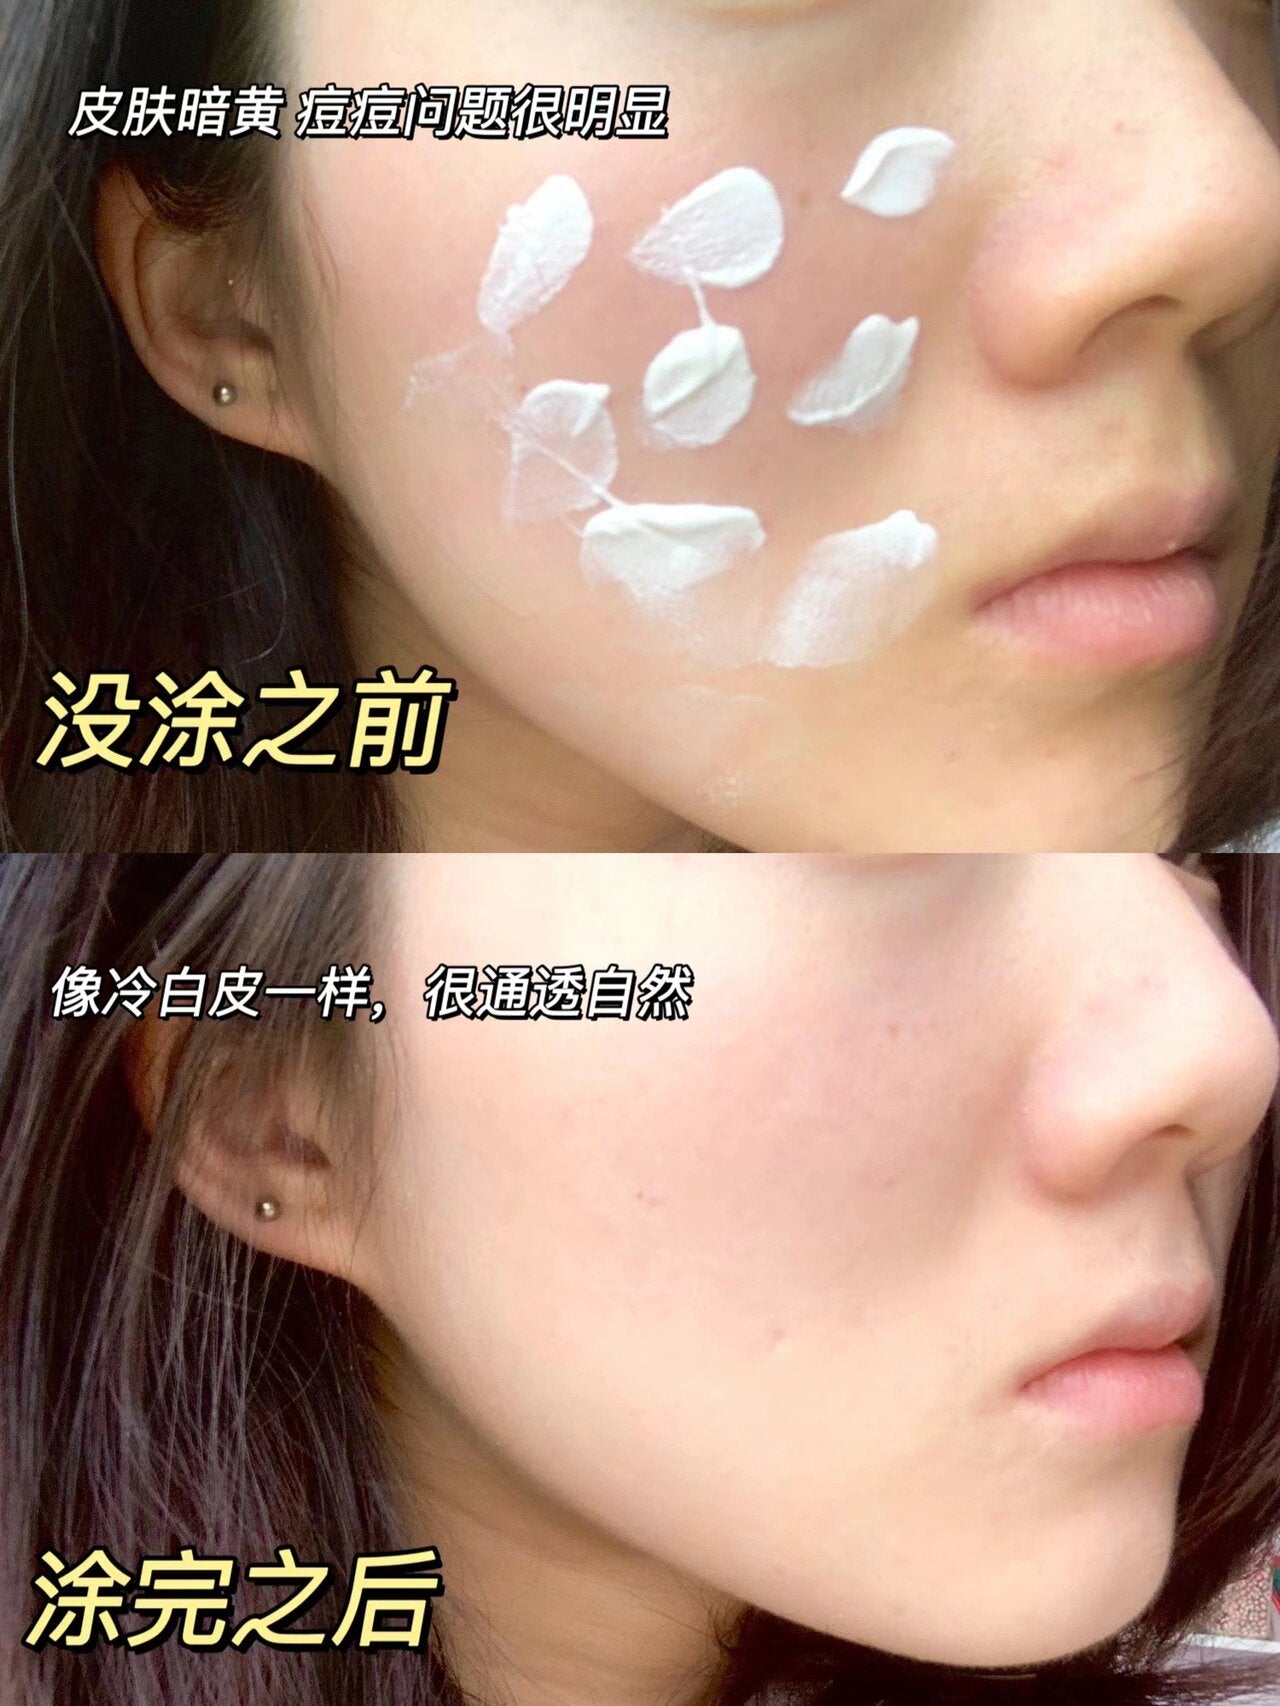 Za Brightening Oil Control Moisturizing 2-in-1 Sunscreen Makeup Primer 35g 姬芮美白控油保湿二合一防晒隔离霜